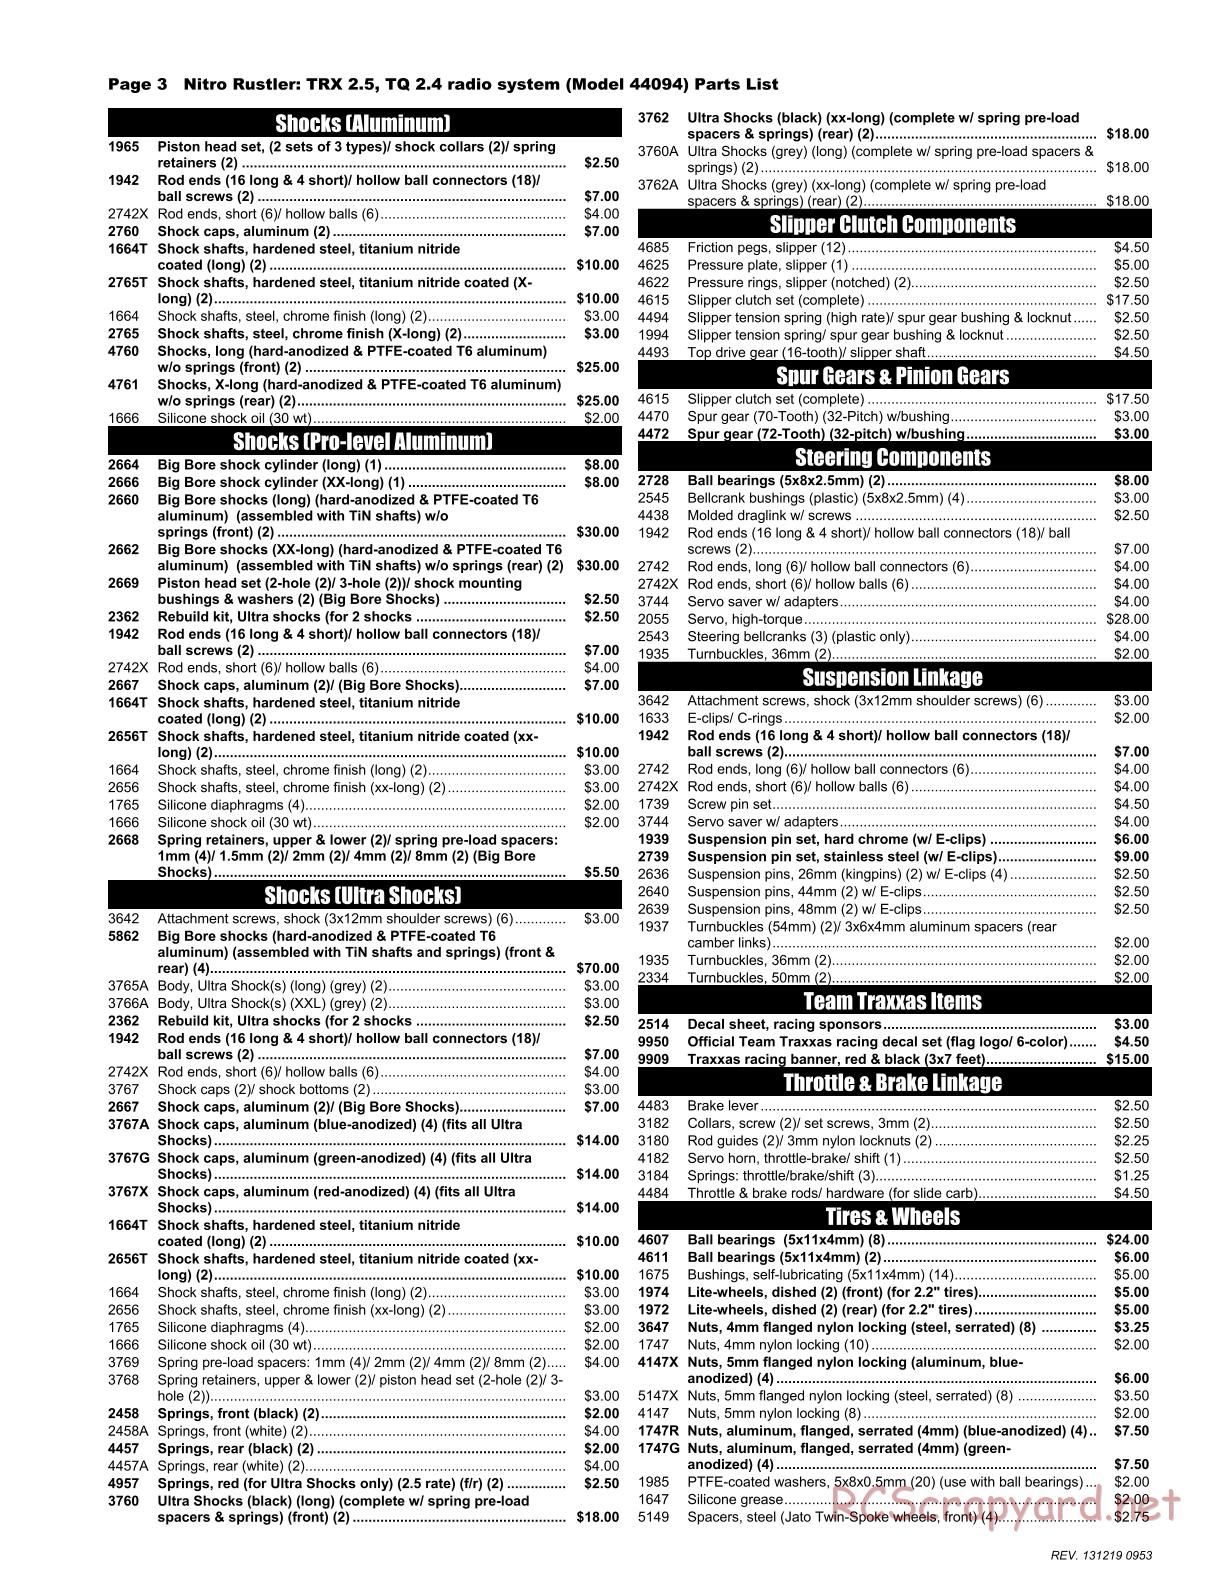 Traxxas - Nitro Rustler (2013) - Parts List - Page 3